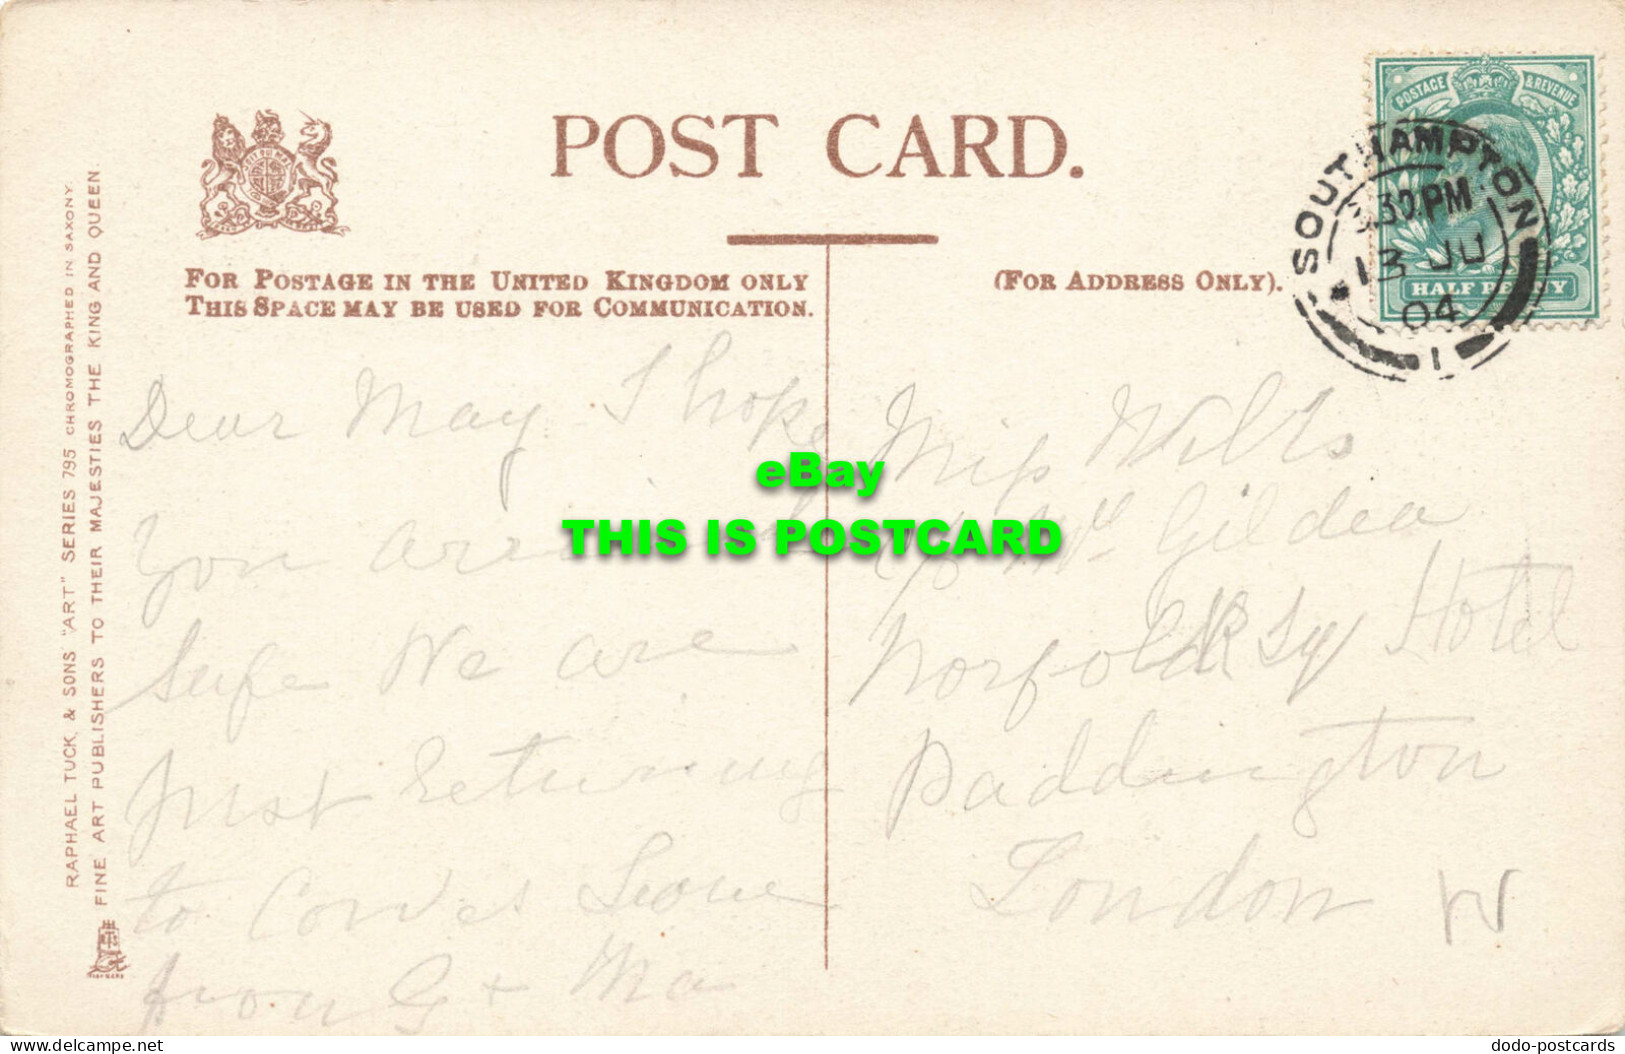 R594242 Sussex. Bodiam Castle. Tuck. Art Series 795. 1904 - World